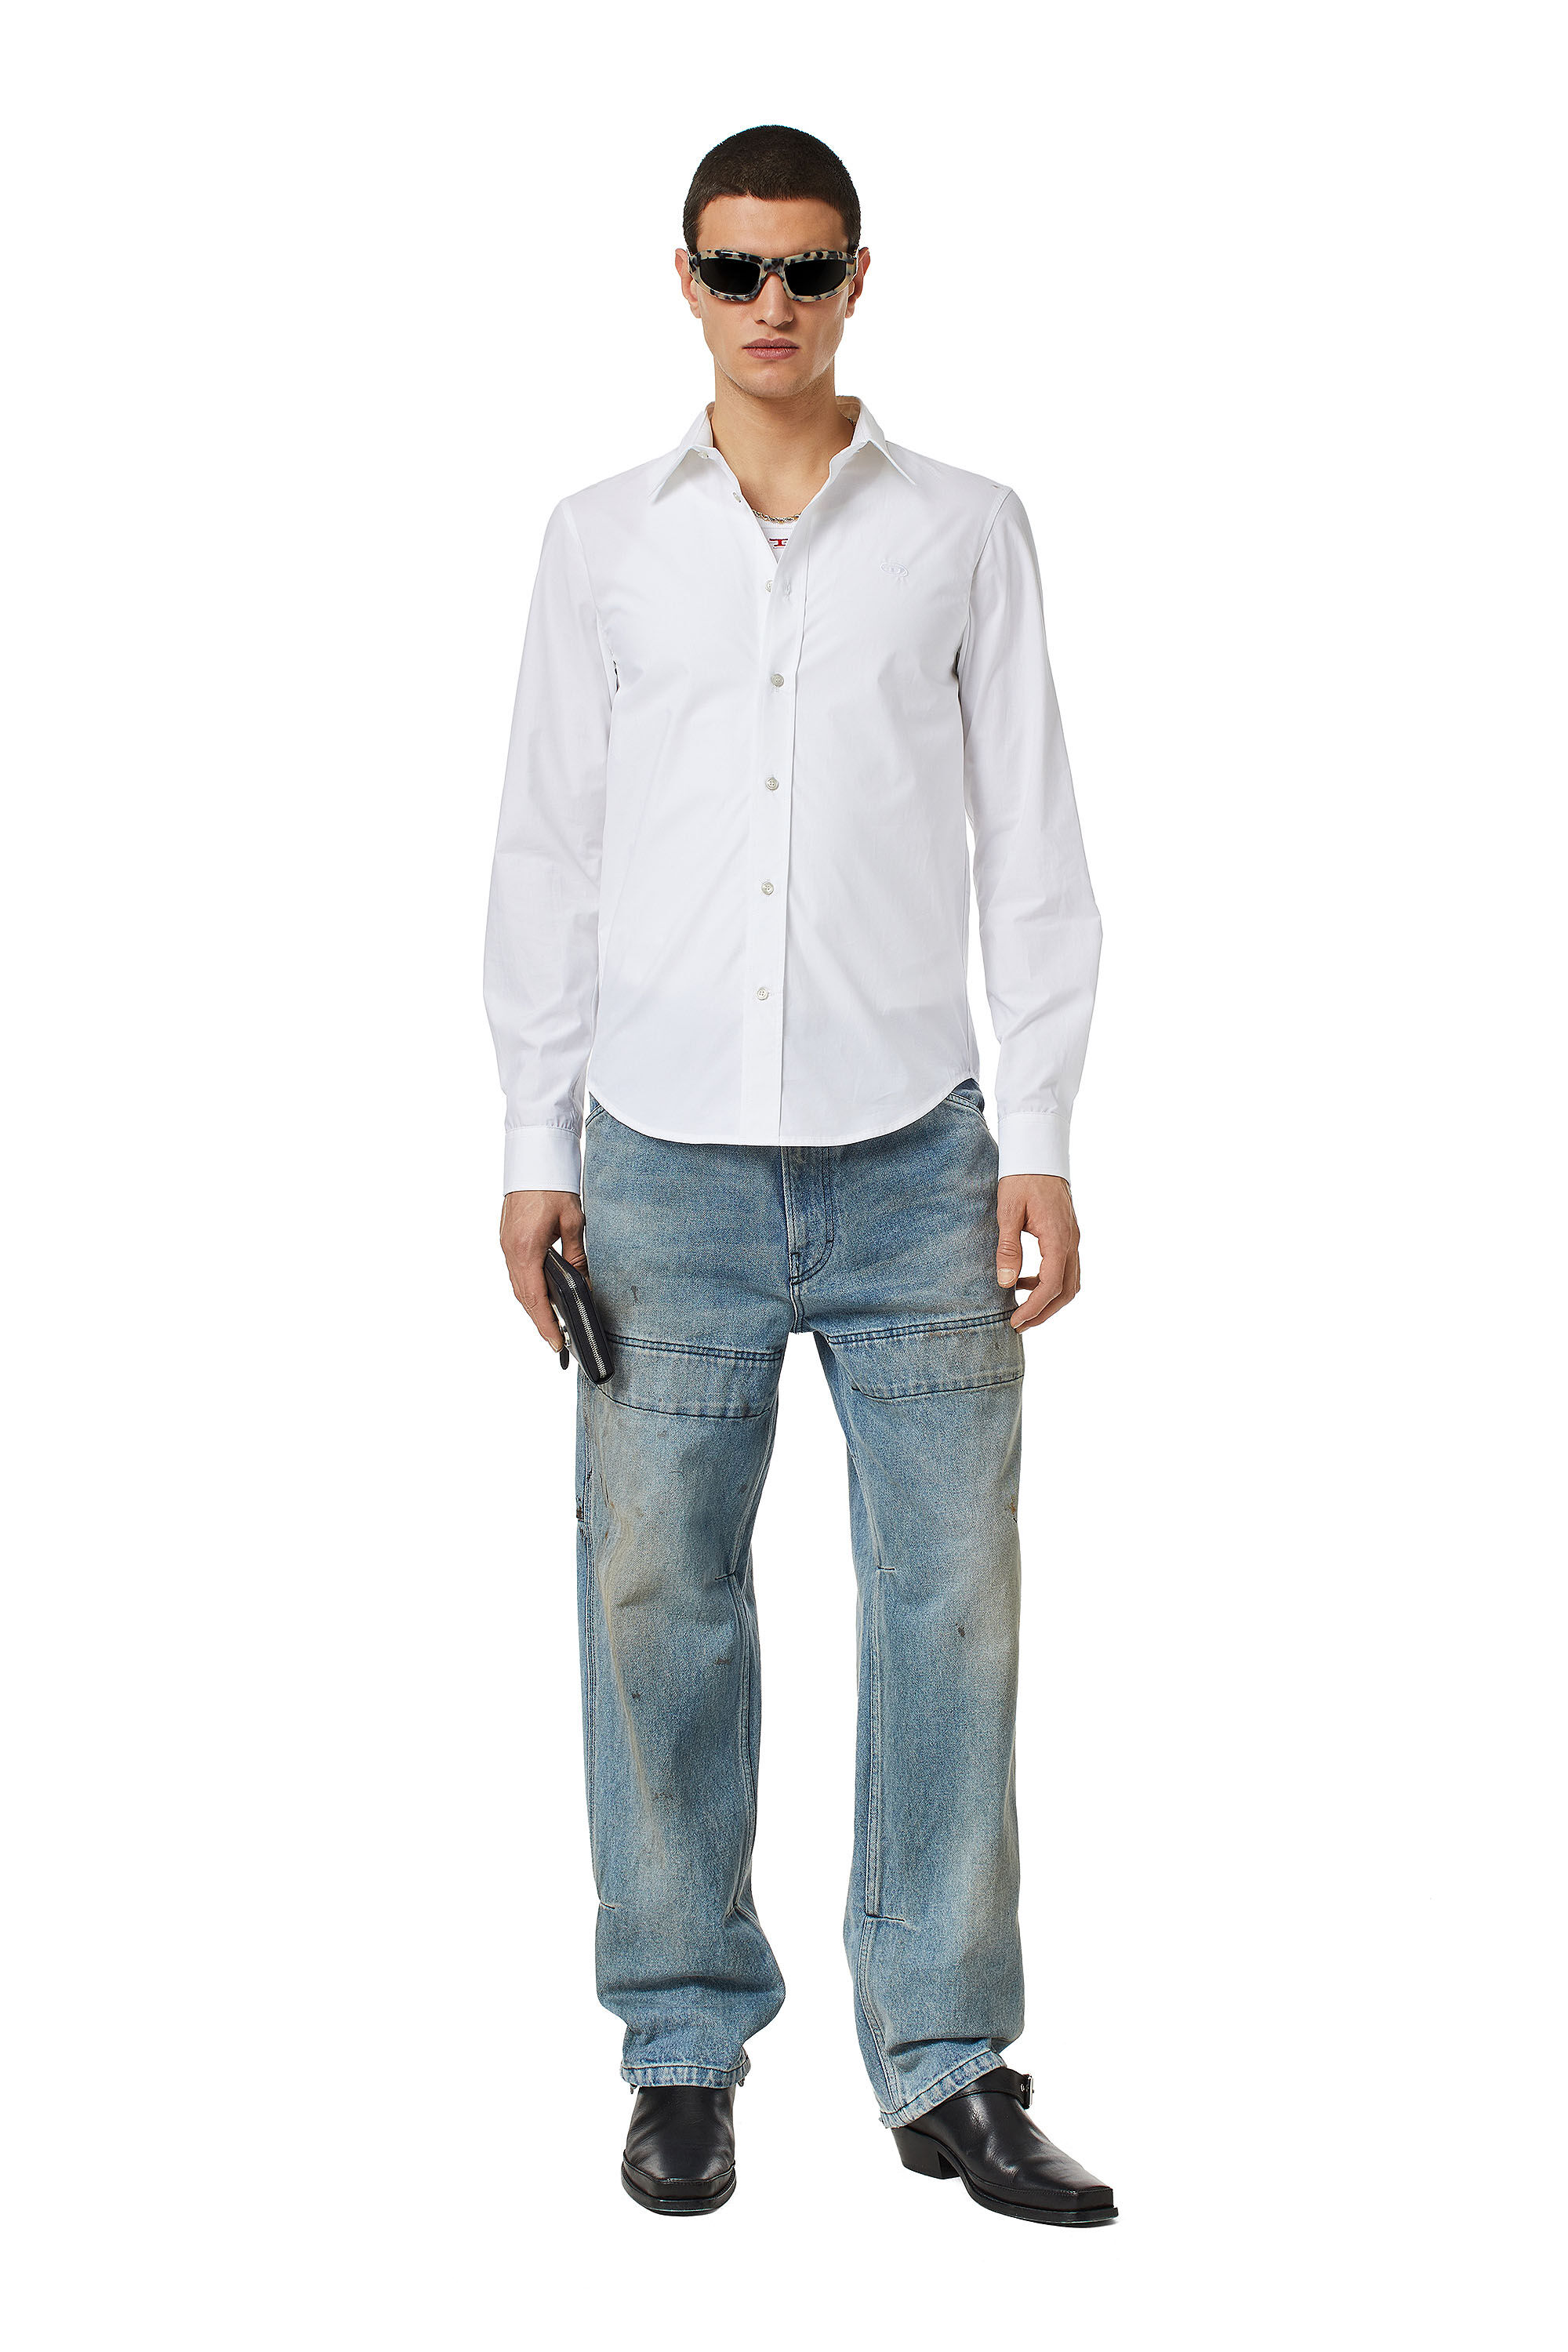 Diesel - S-BEN-CL, Man Shirt in technical cotton in White - Image 1